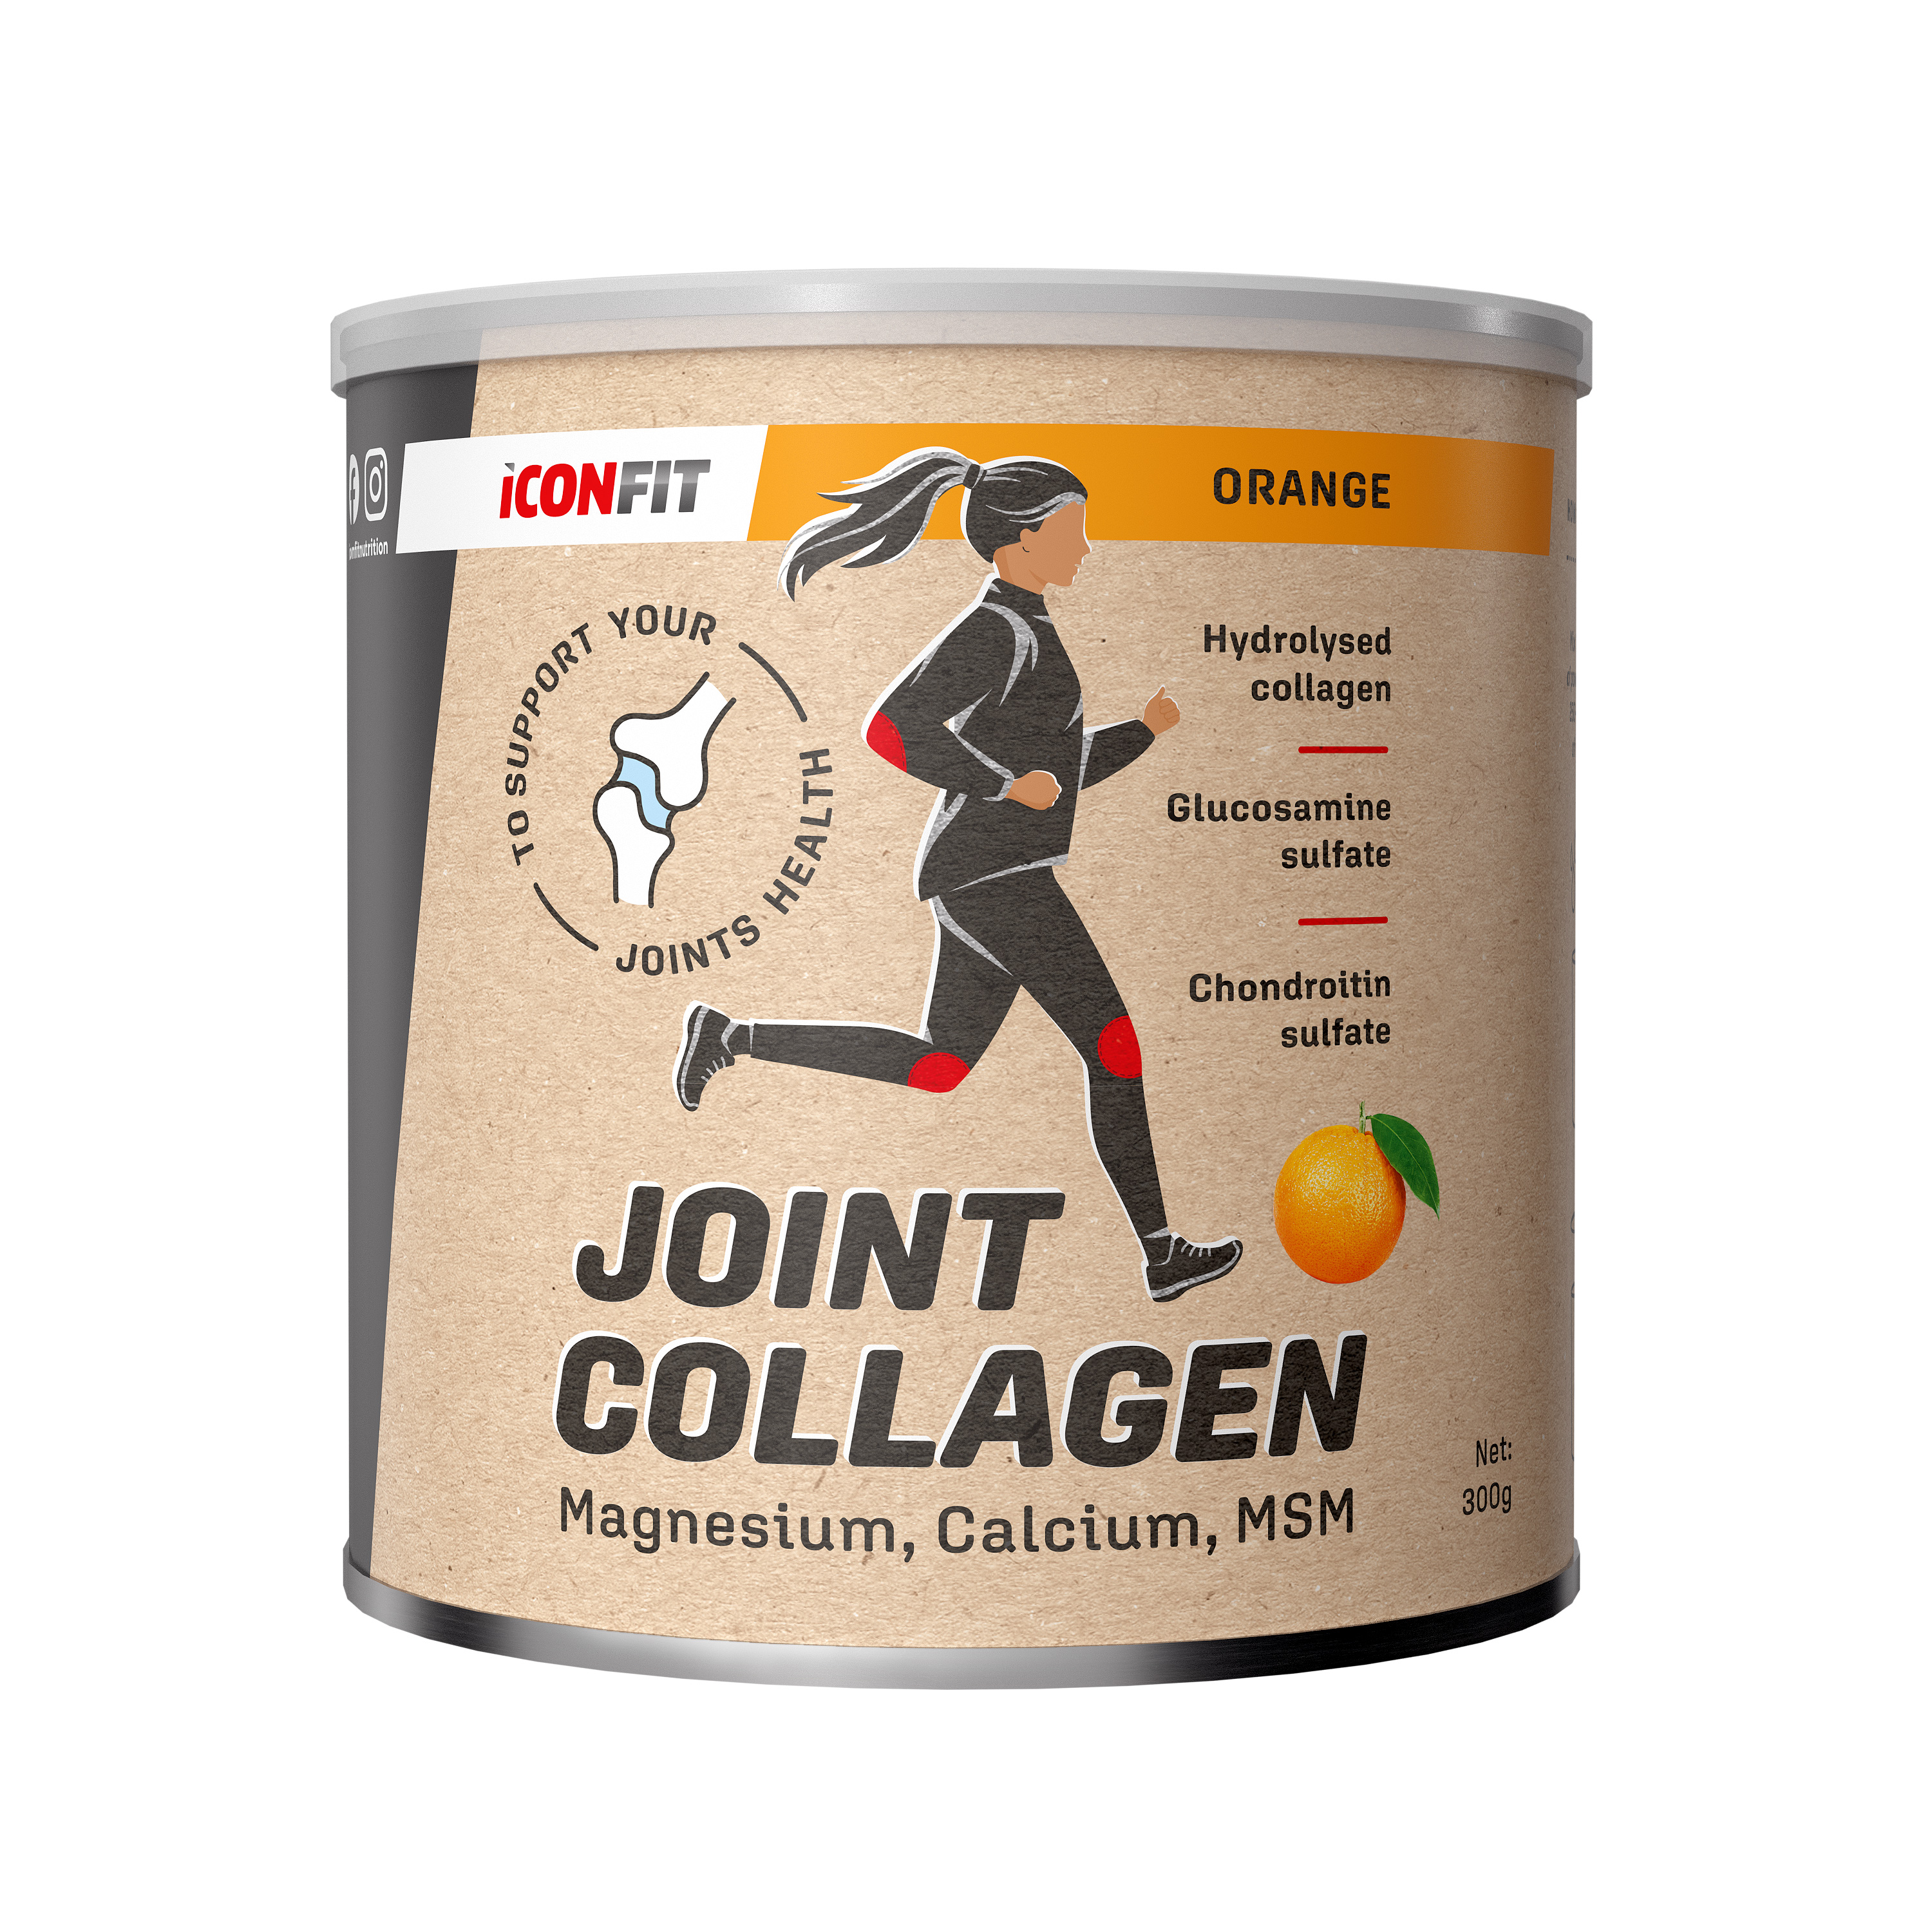 ICONFIT-Joint-Collagen-Orange-300g